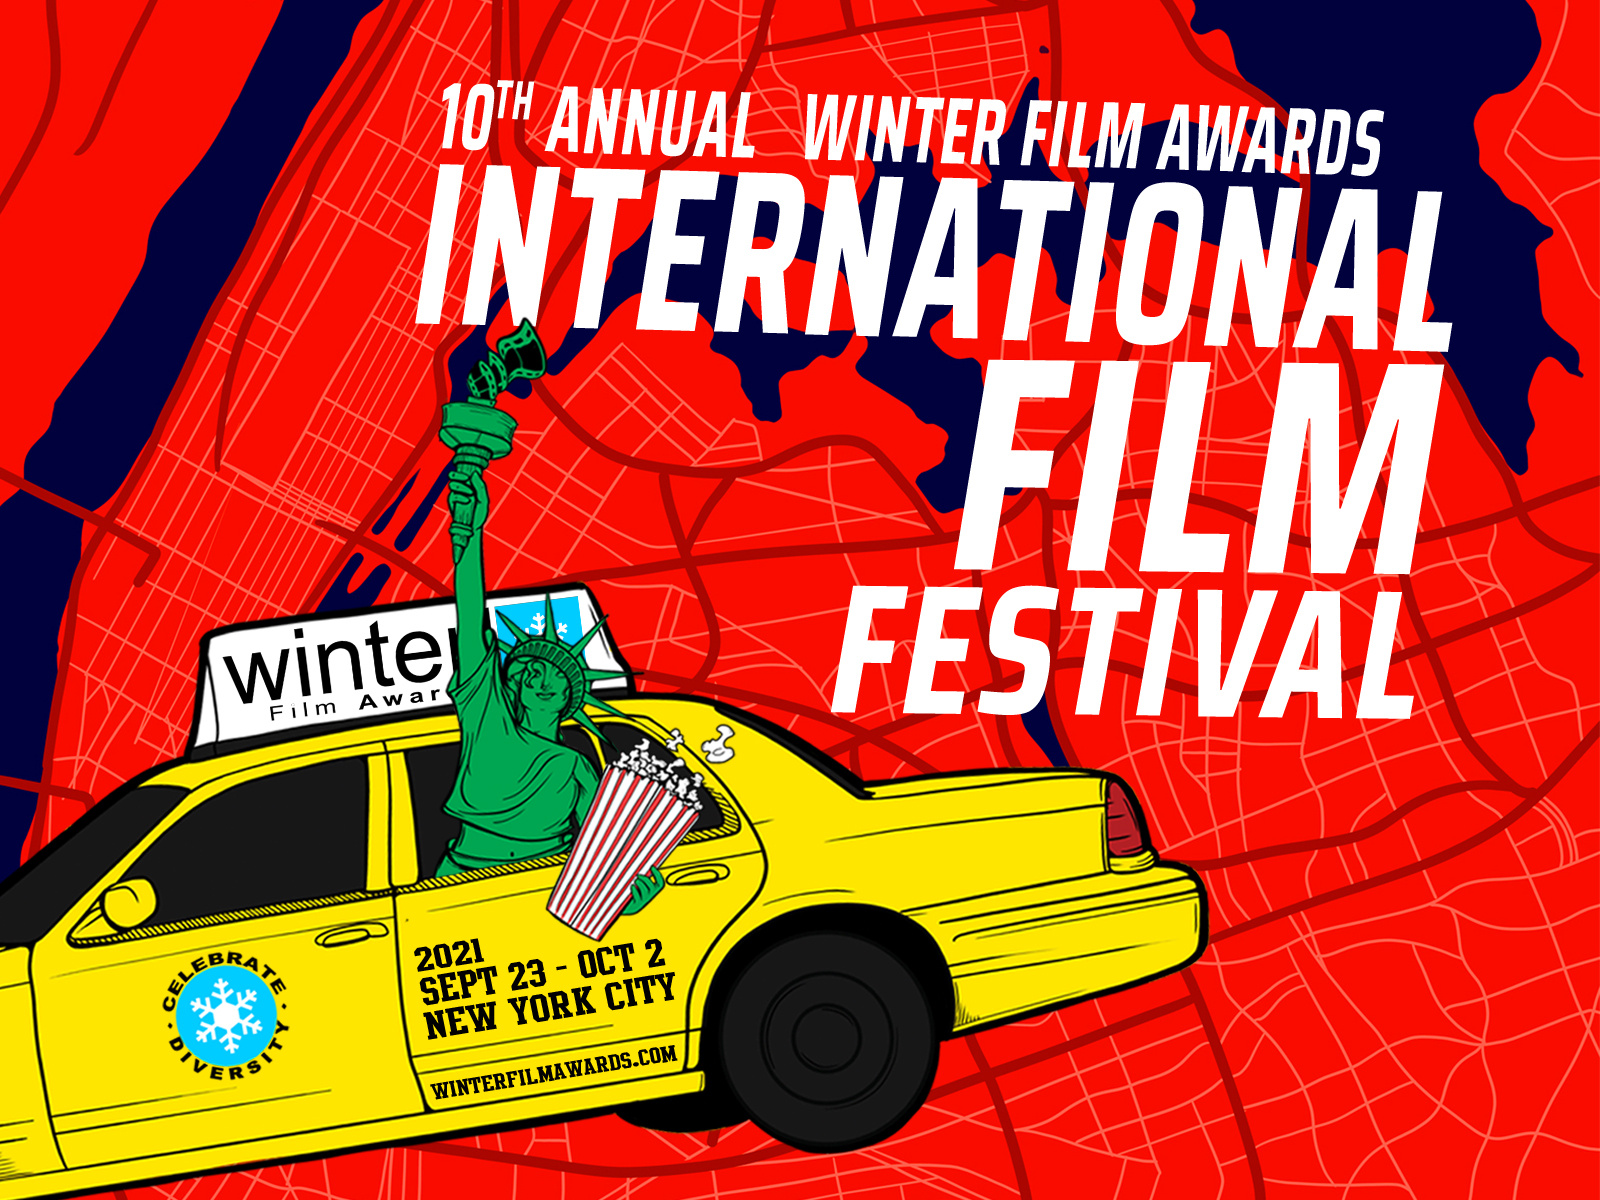 2021 Winter Film Awards International Film Festival